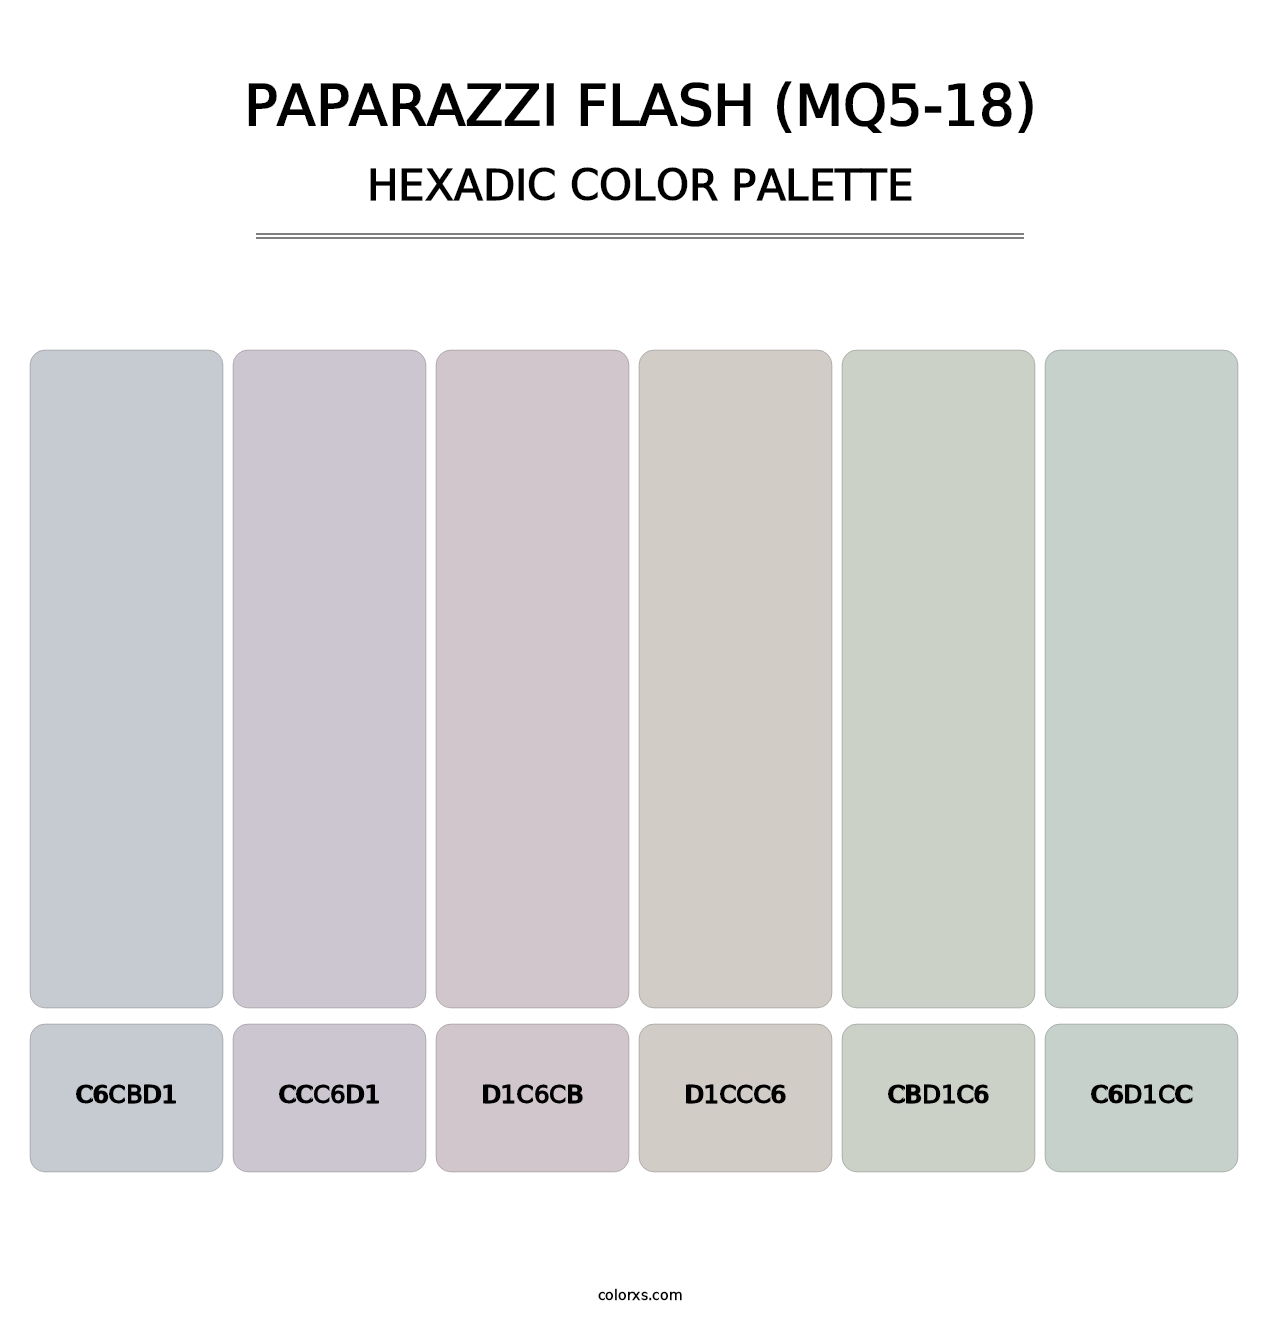 Paparazzi Flash (MQ5-18) - Hexadic Color Palette